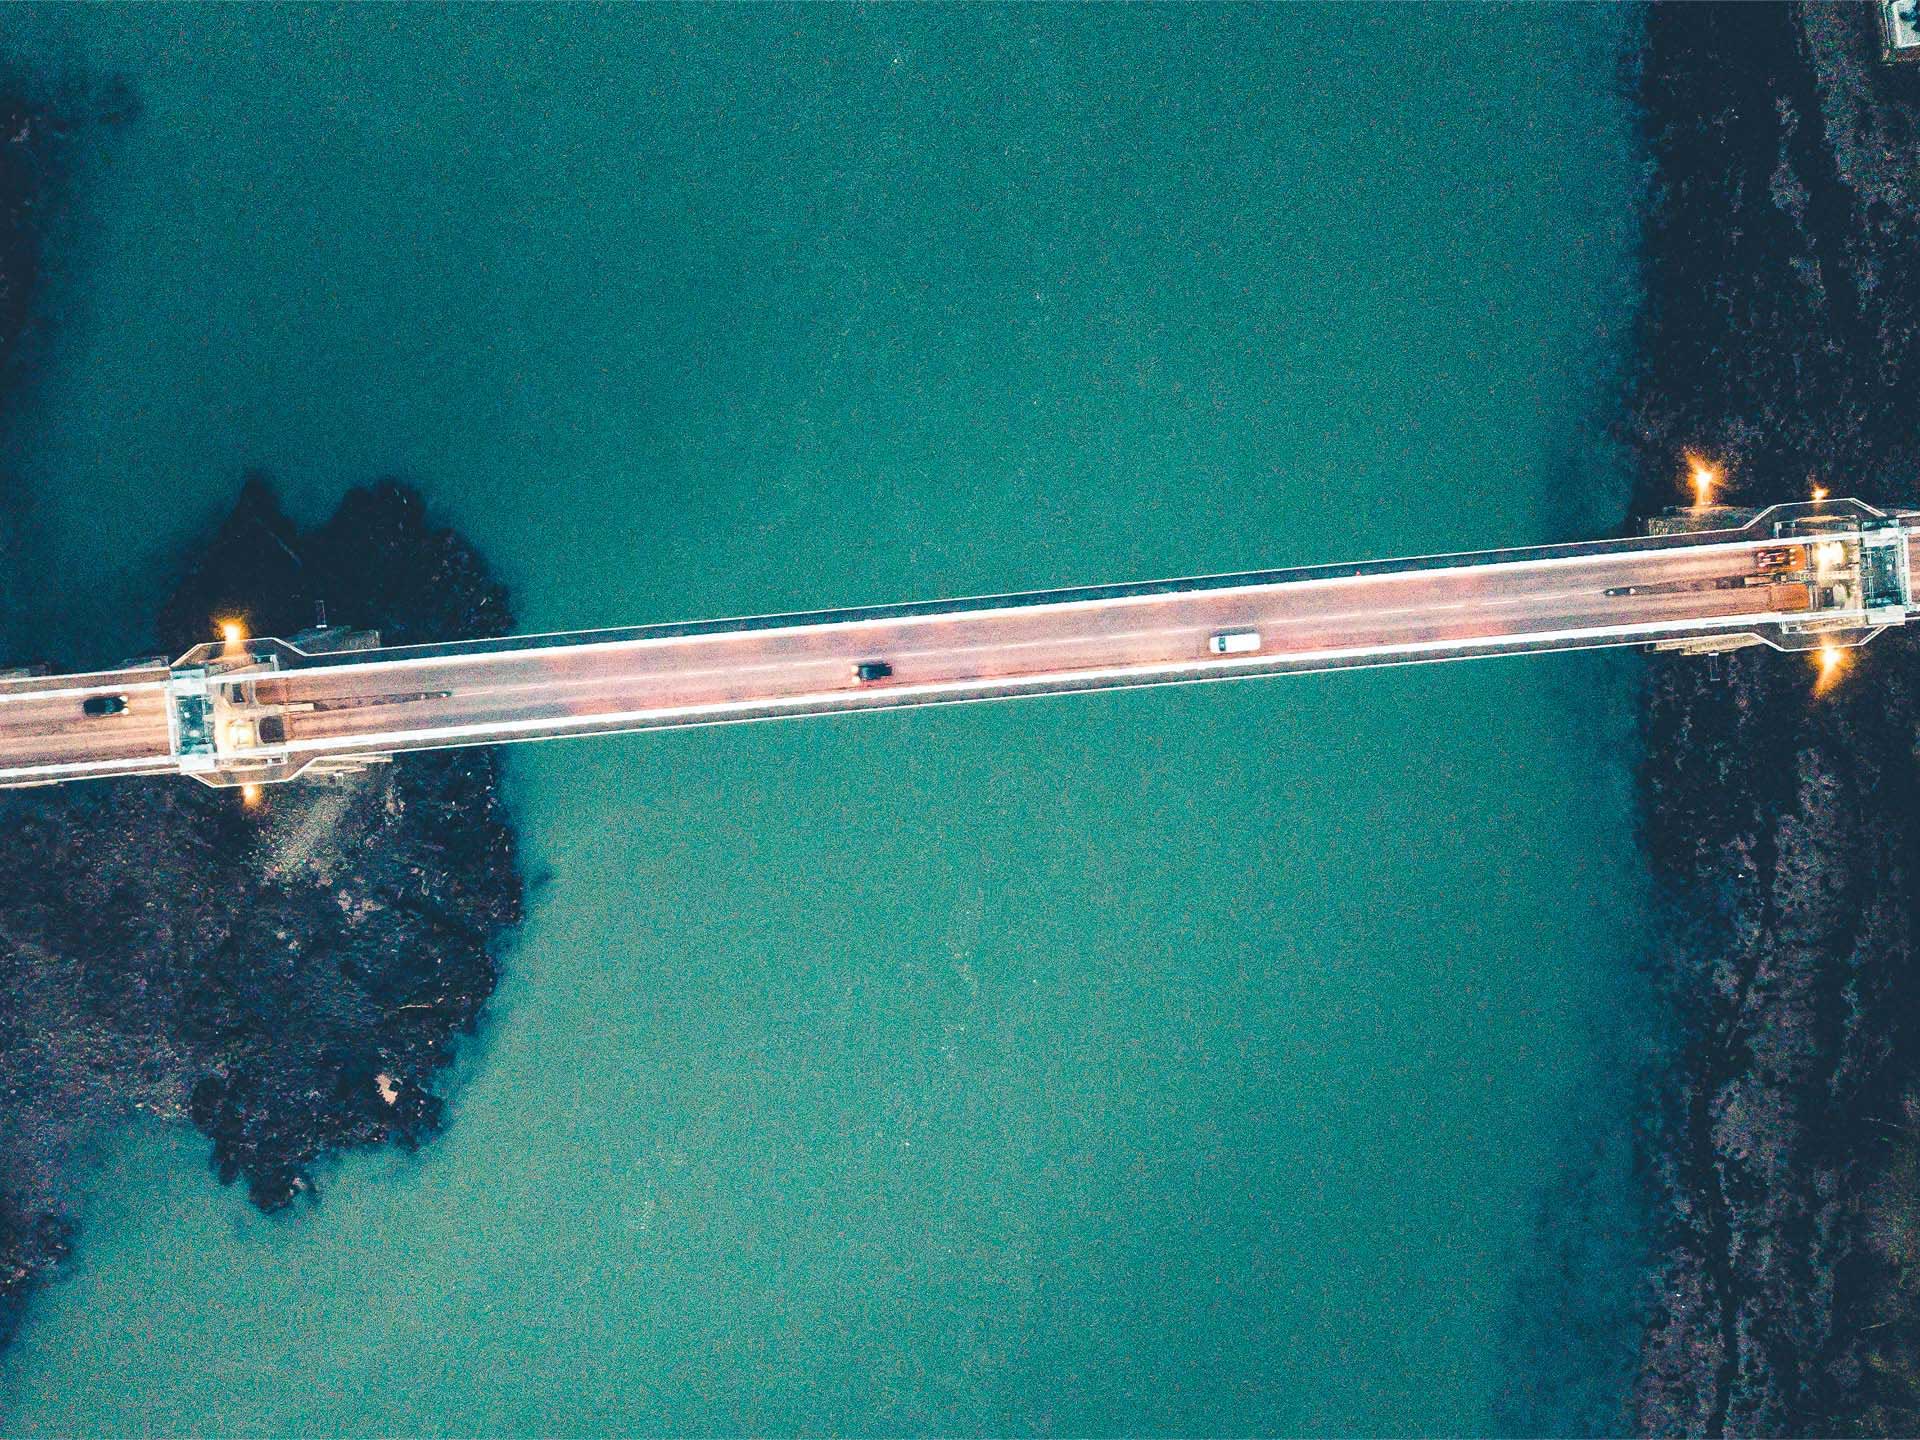 Drrone captured shot of Menai Bridge from above as cars cross over.